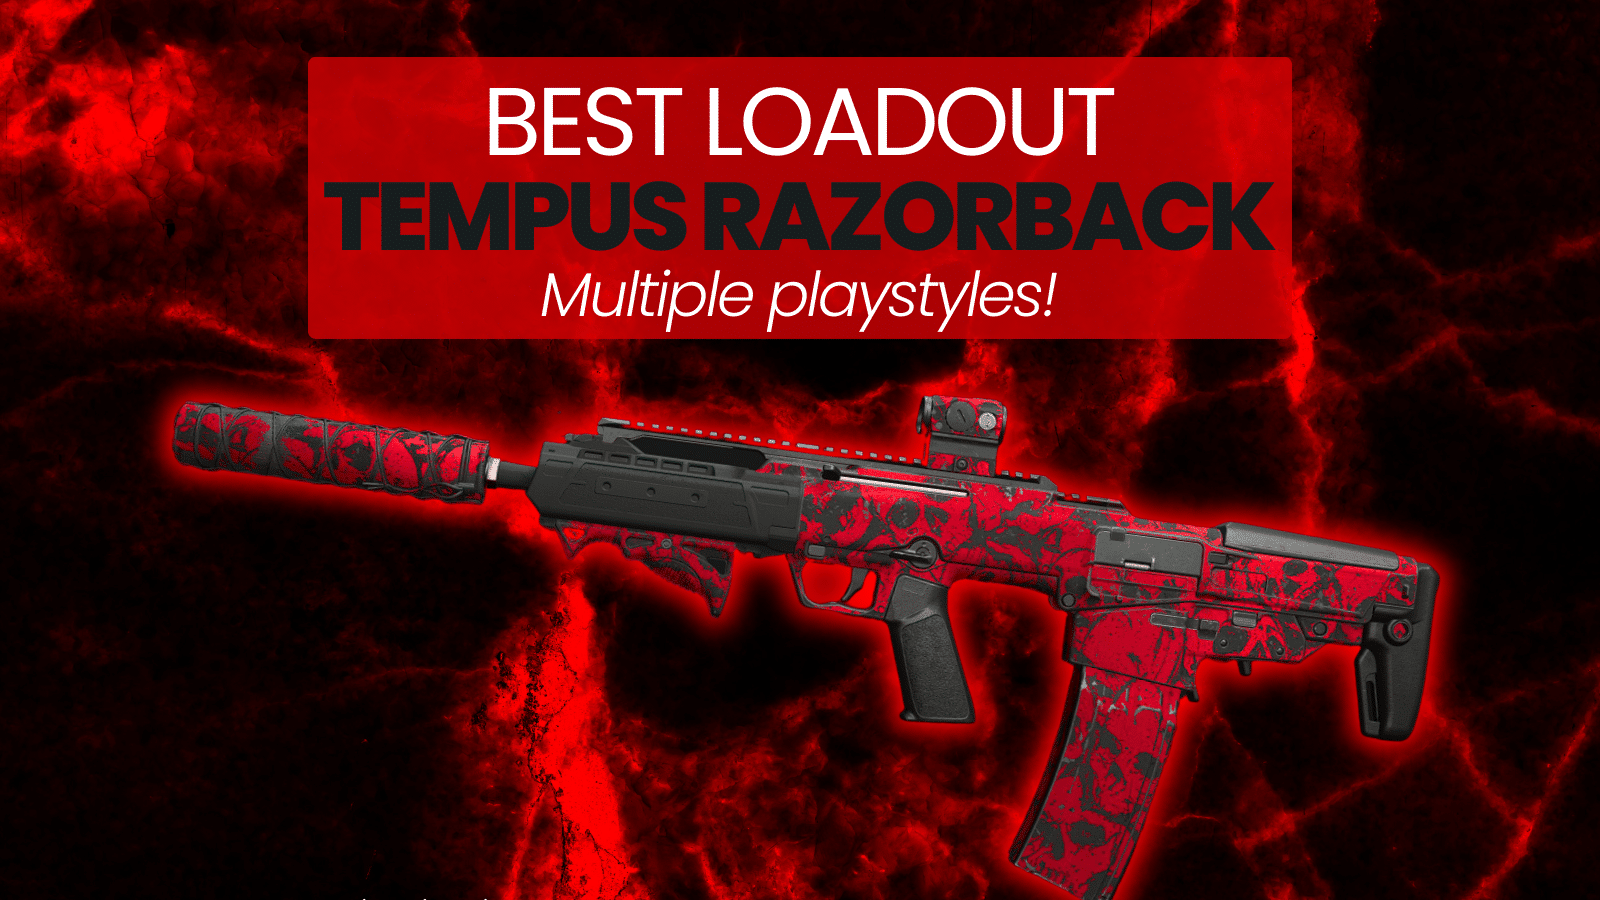 Best Tempus RazorbaCk Warzone Loadout for season 6 - Underrated gun!